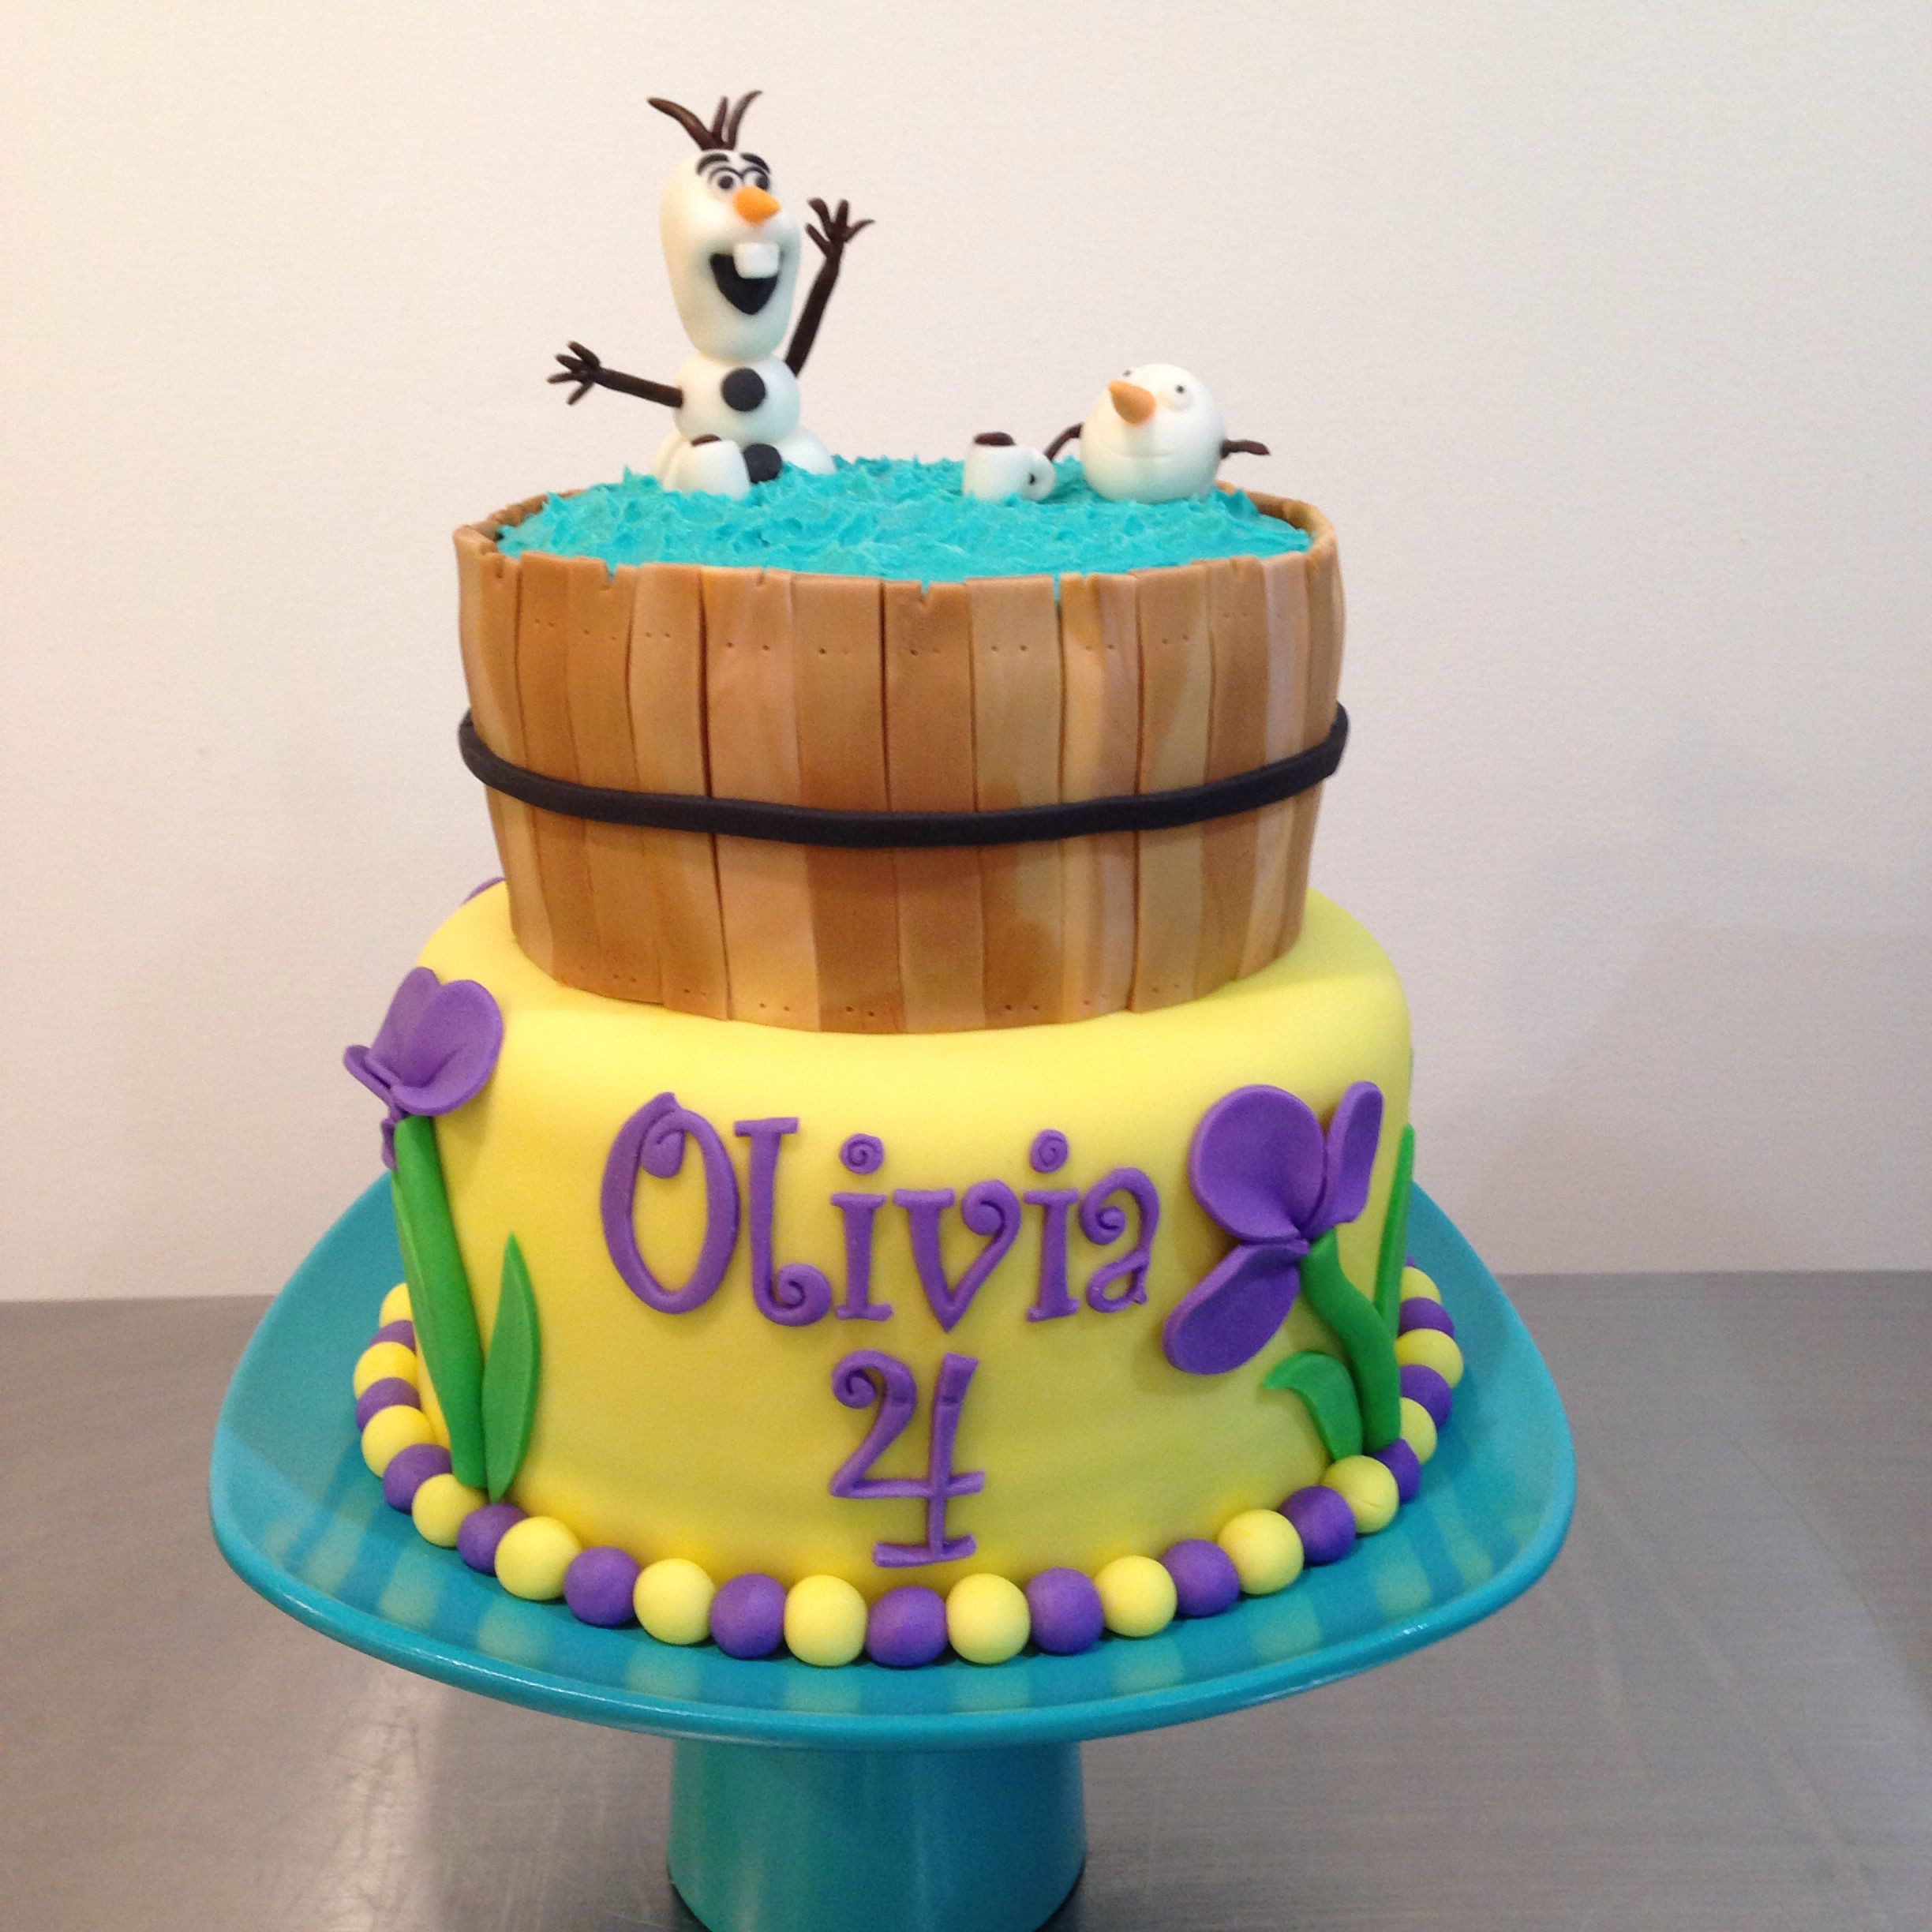 Olaf Birthday Cake Ideas
 Olaf Birthday Cake With images